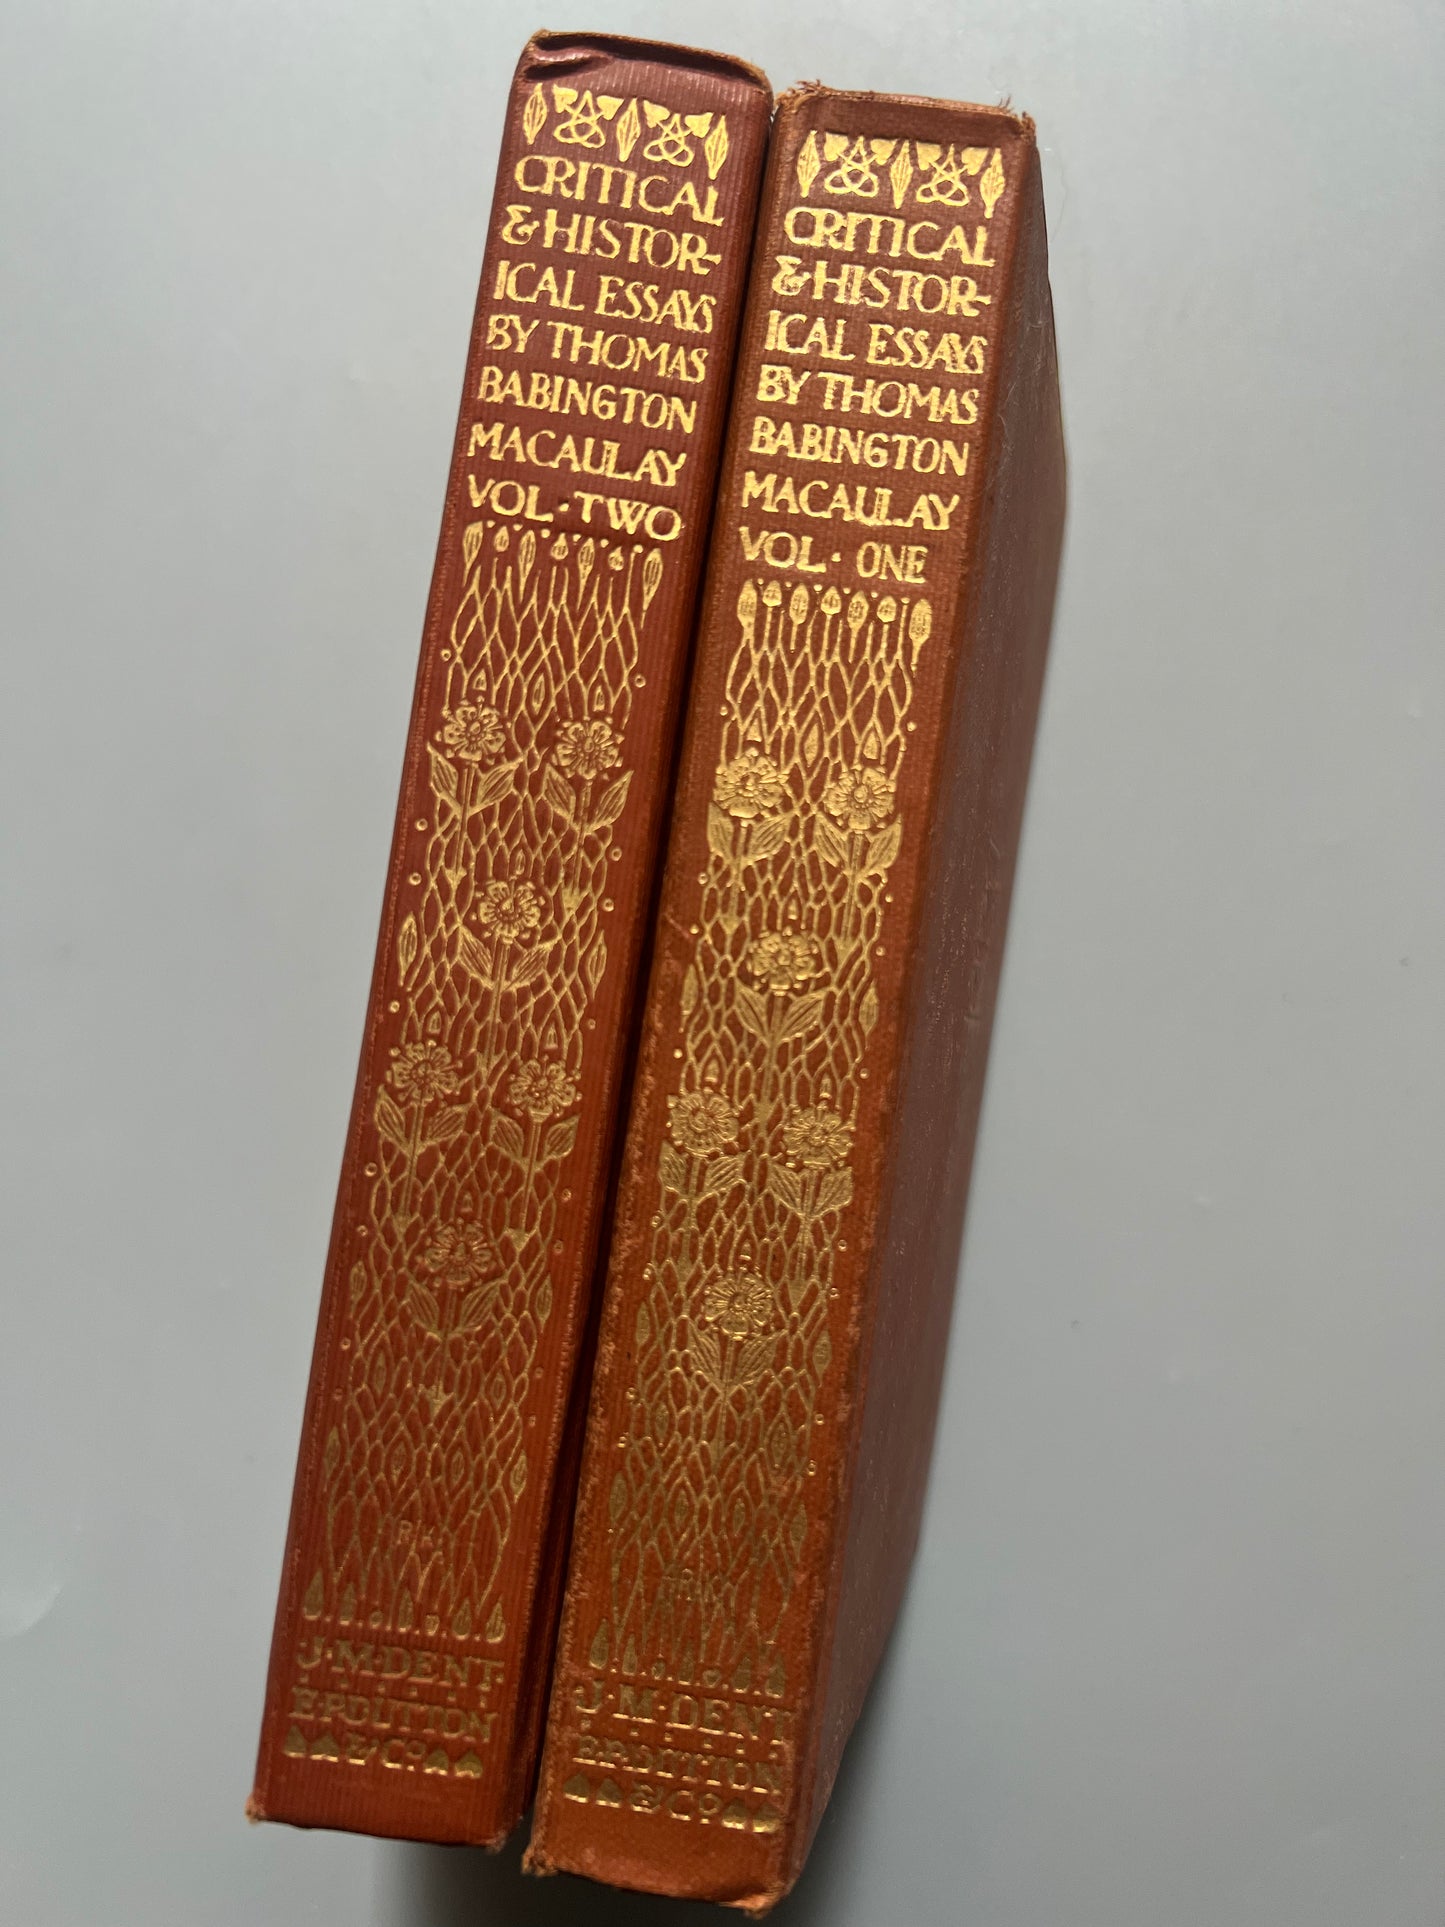 Critical and historical essays by Thomas Babington Macaulay - J. M. Dent & Sons, 1911